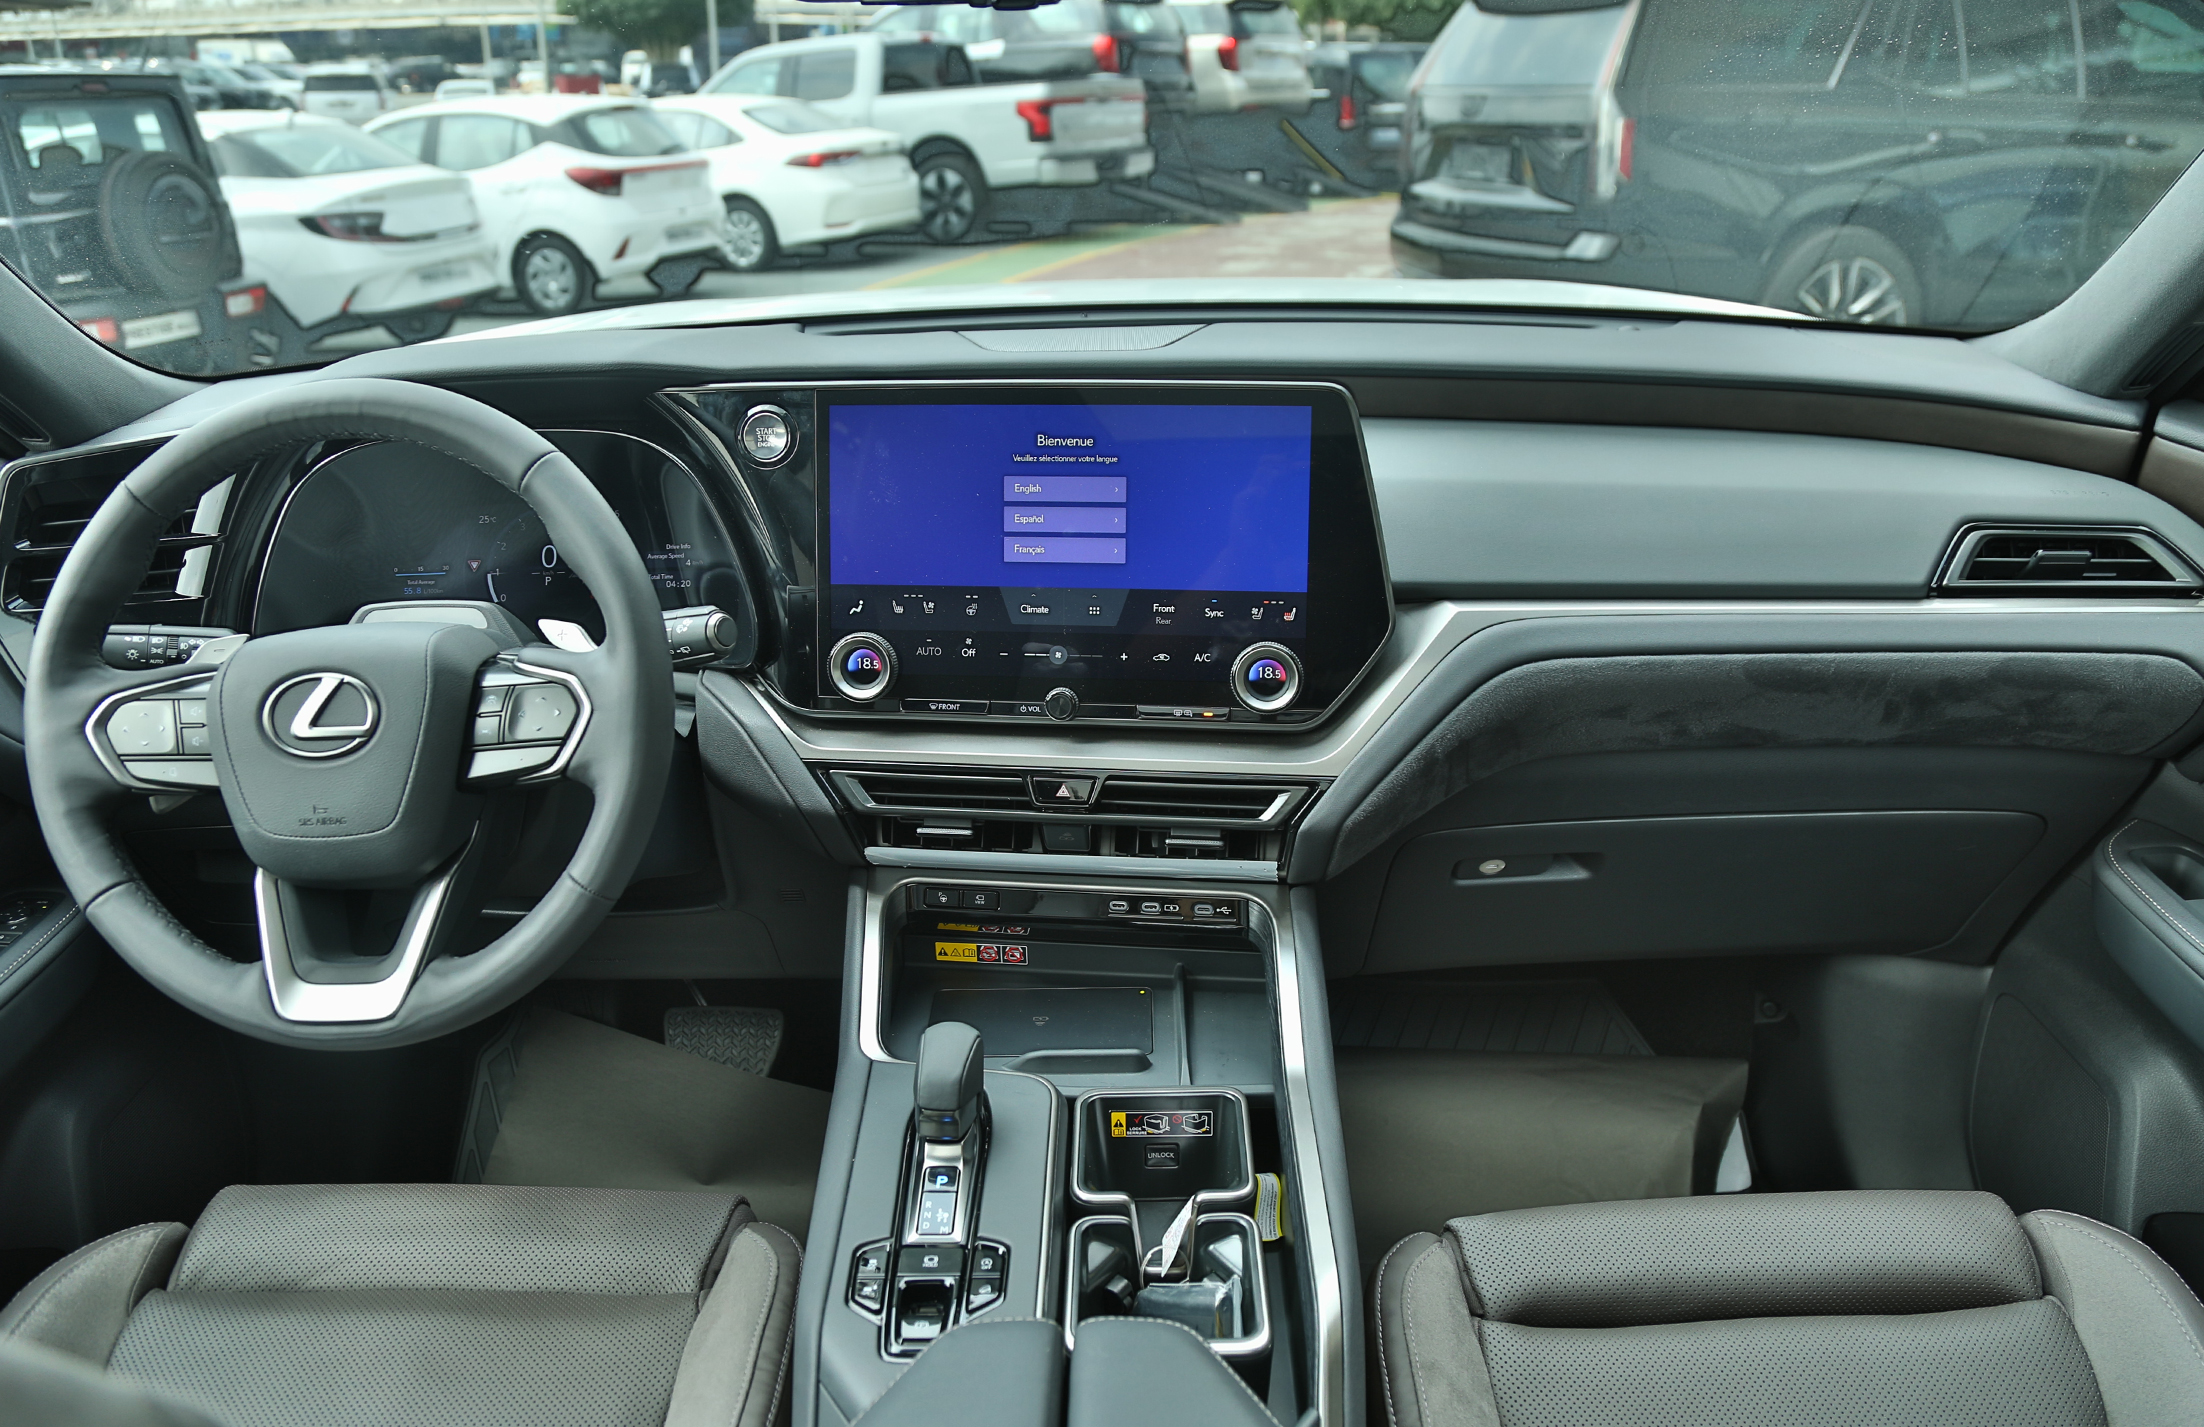 Lexus TX 350 EXECUTIVE 7seats. For Local Registration +10% Prestige Motor Dubai